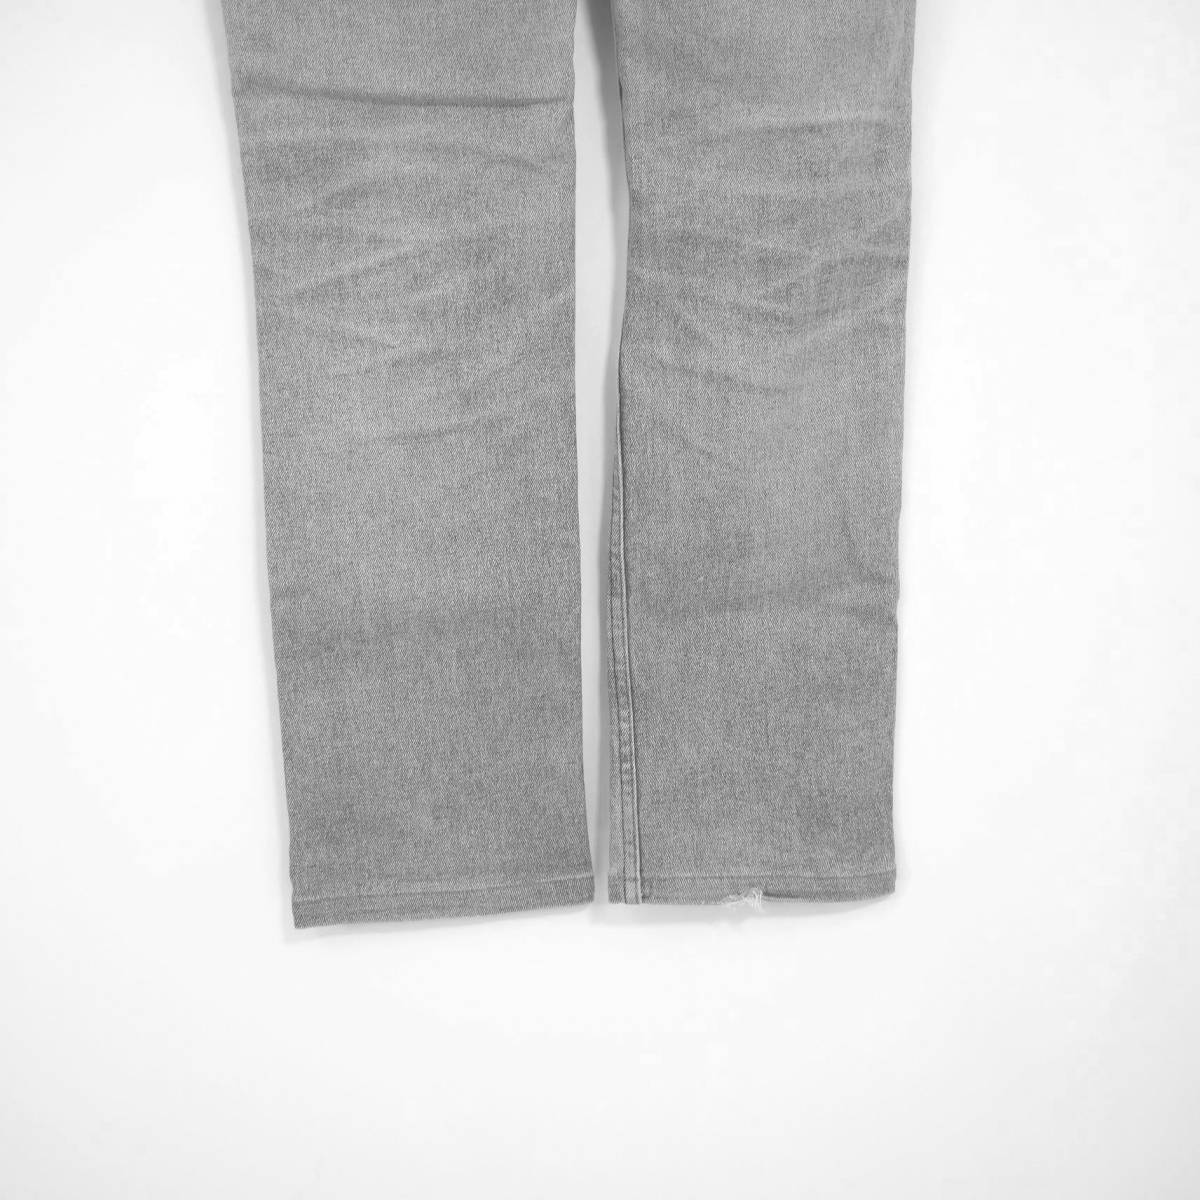 B093 H.R.MARKET Hollywood Ranch Market джинсы размер 29